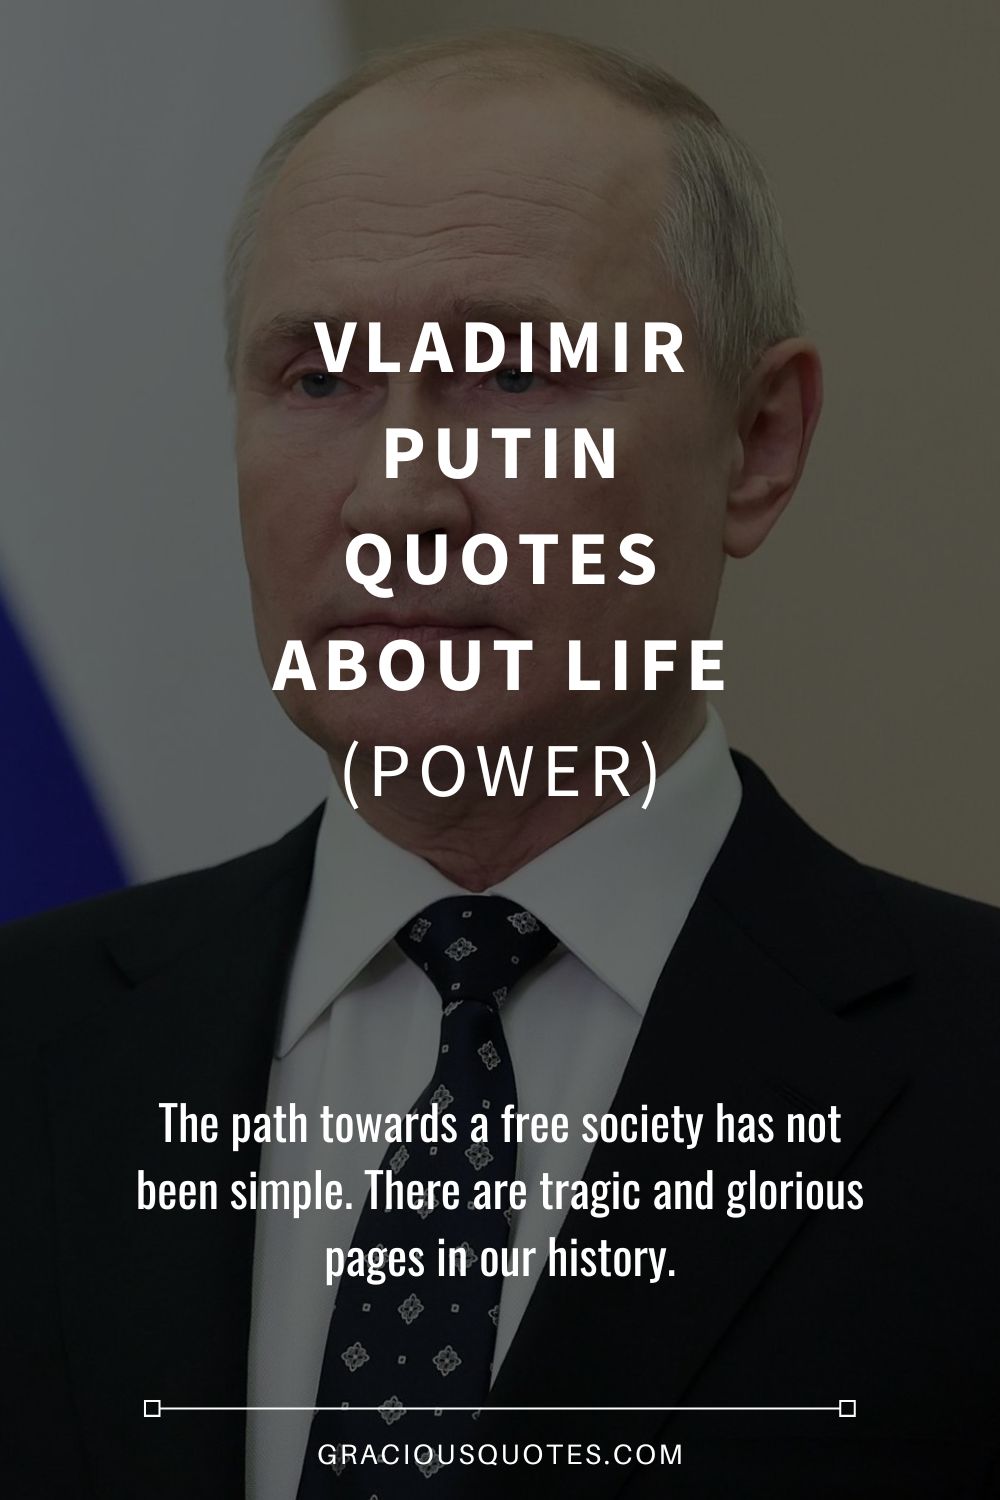 Vladimir Putin Quotes About Life (POWER) - Gracious Quotes